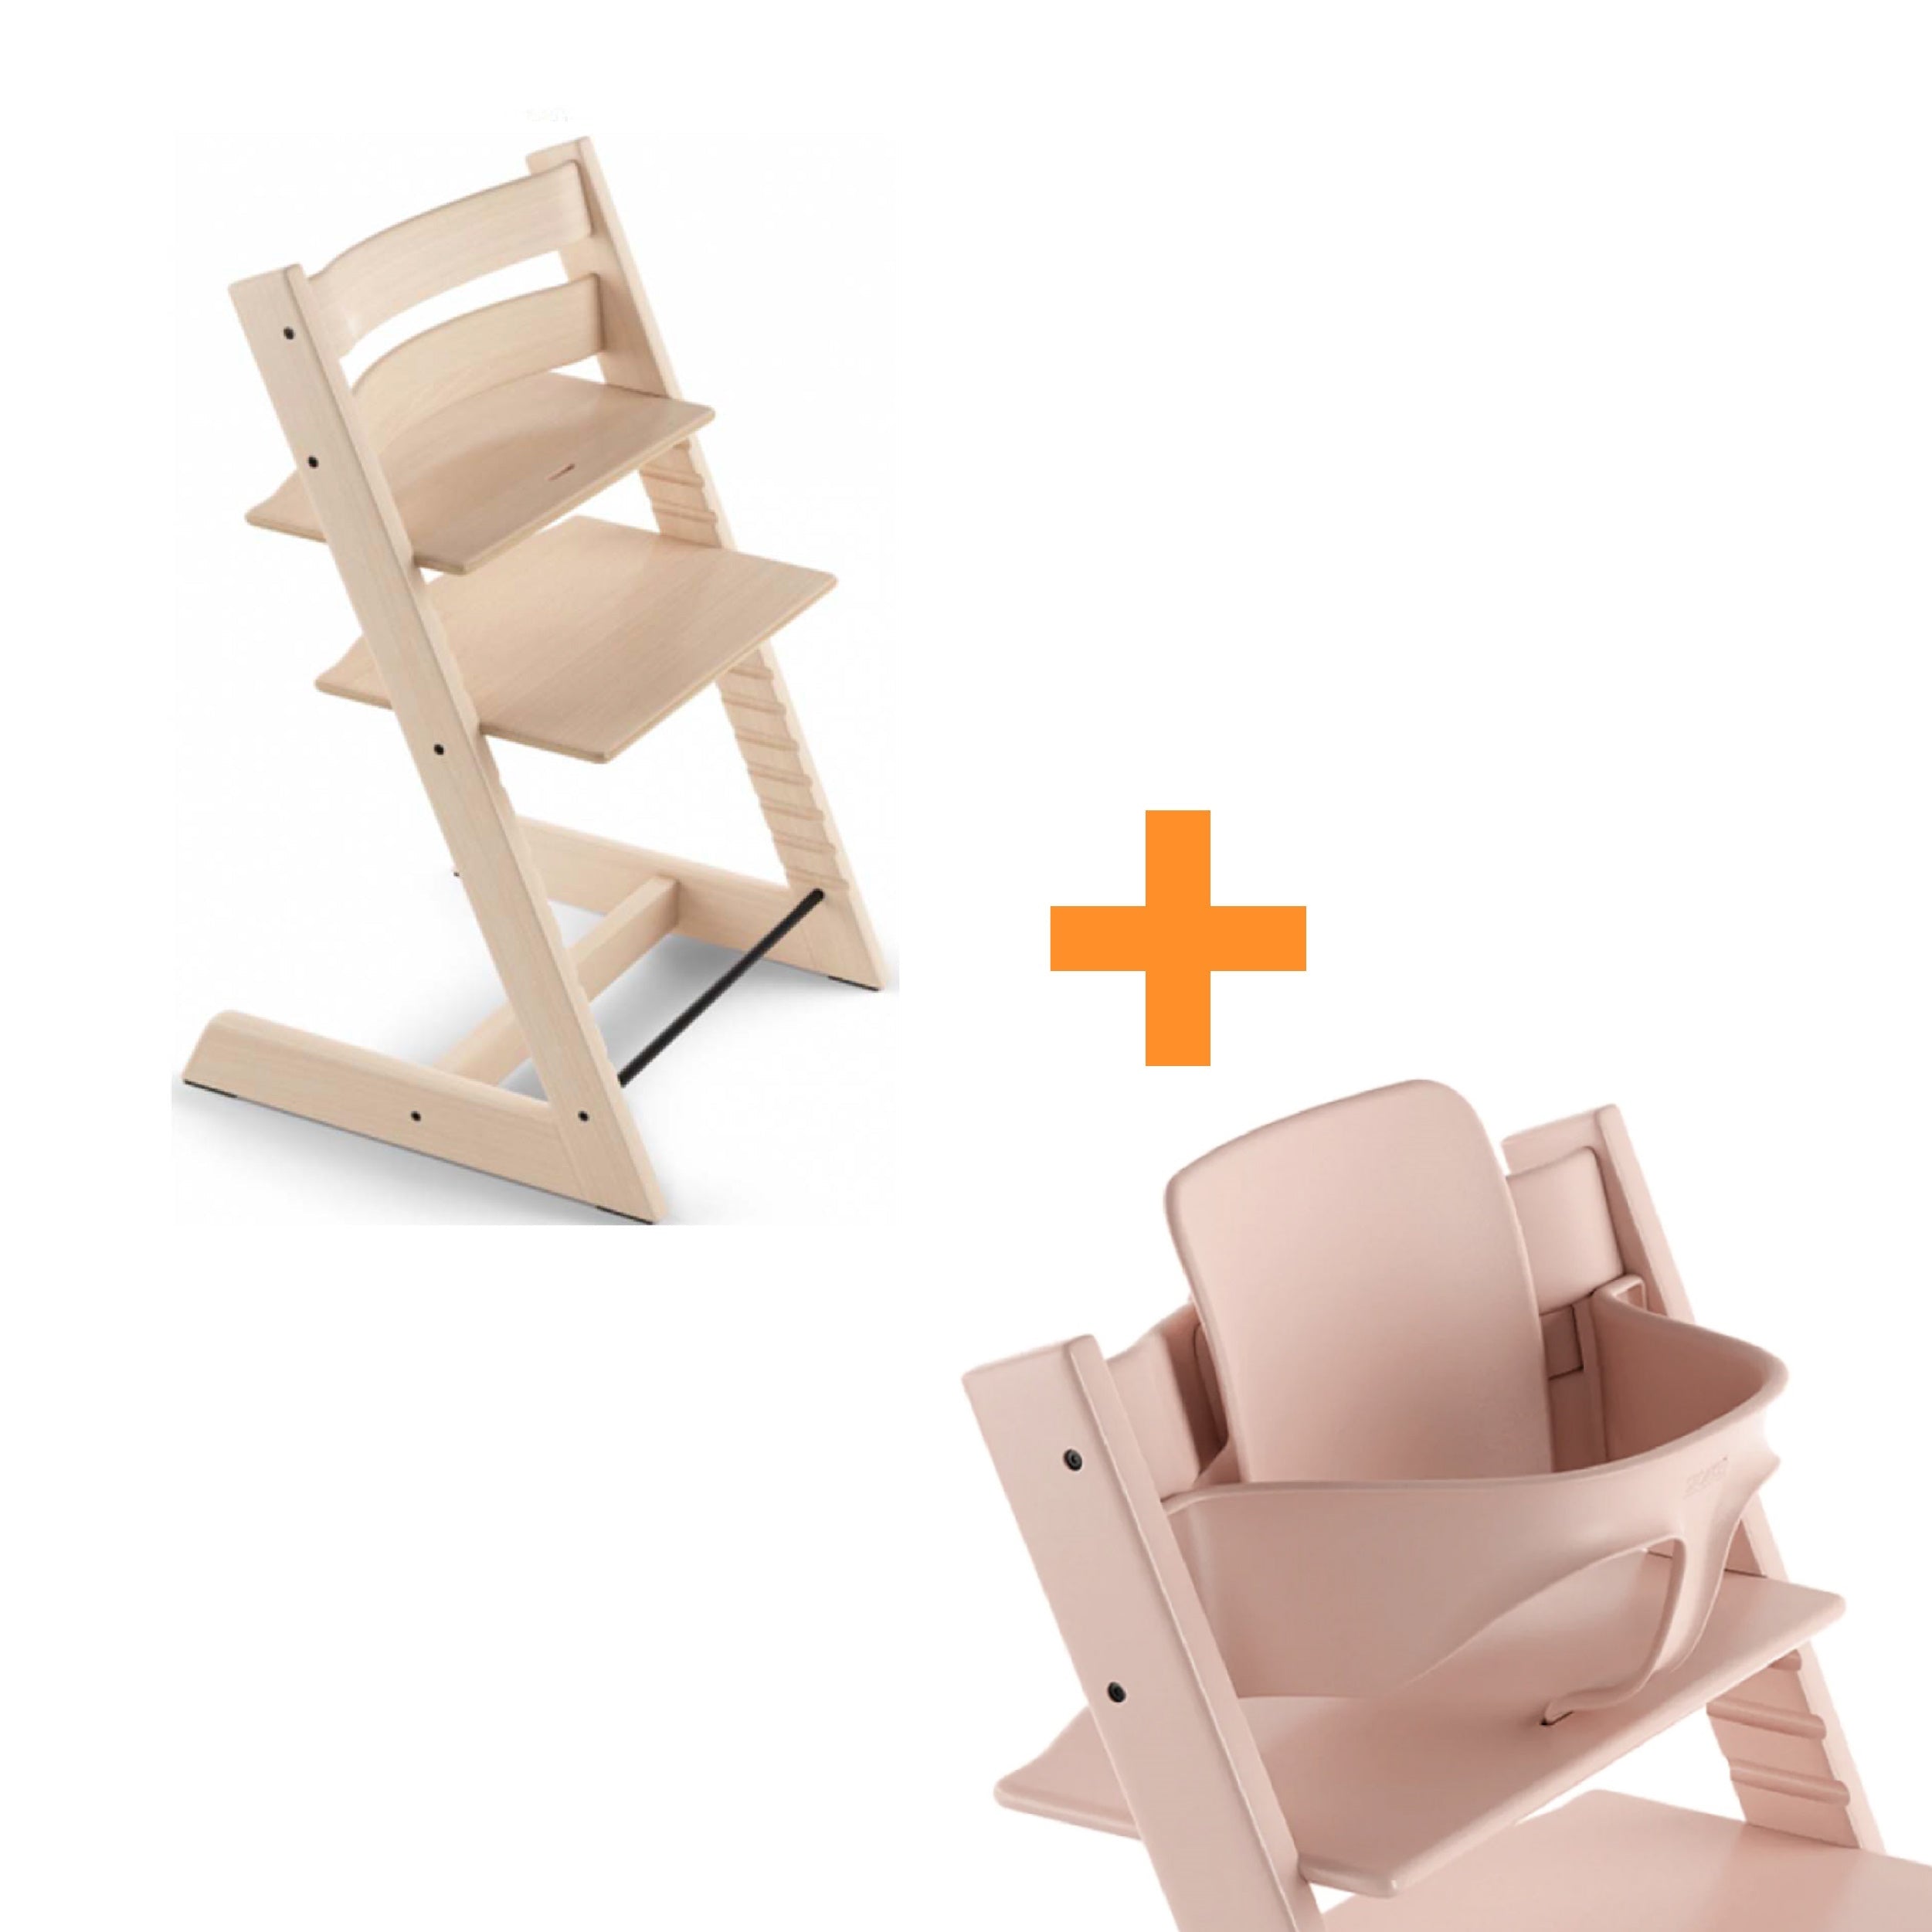 Stokke Tripp Trapp High Chair (FOC Stokke Tripp Trapp Baby Set)